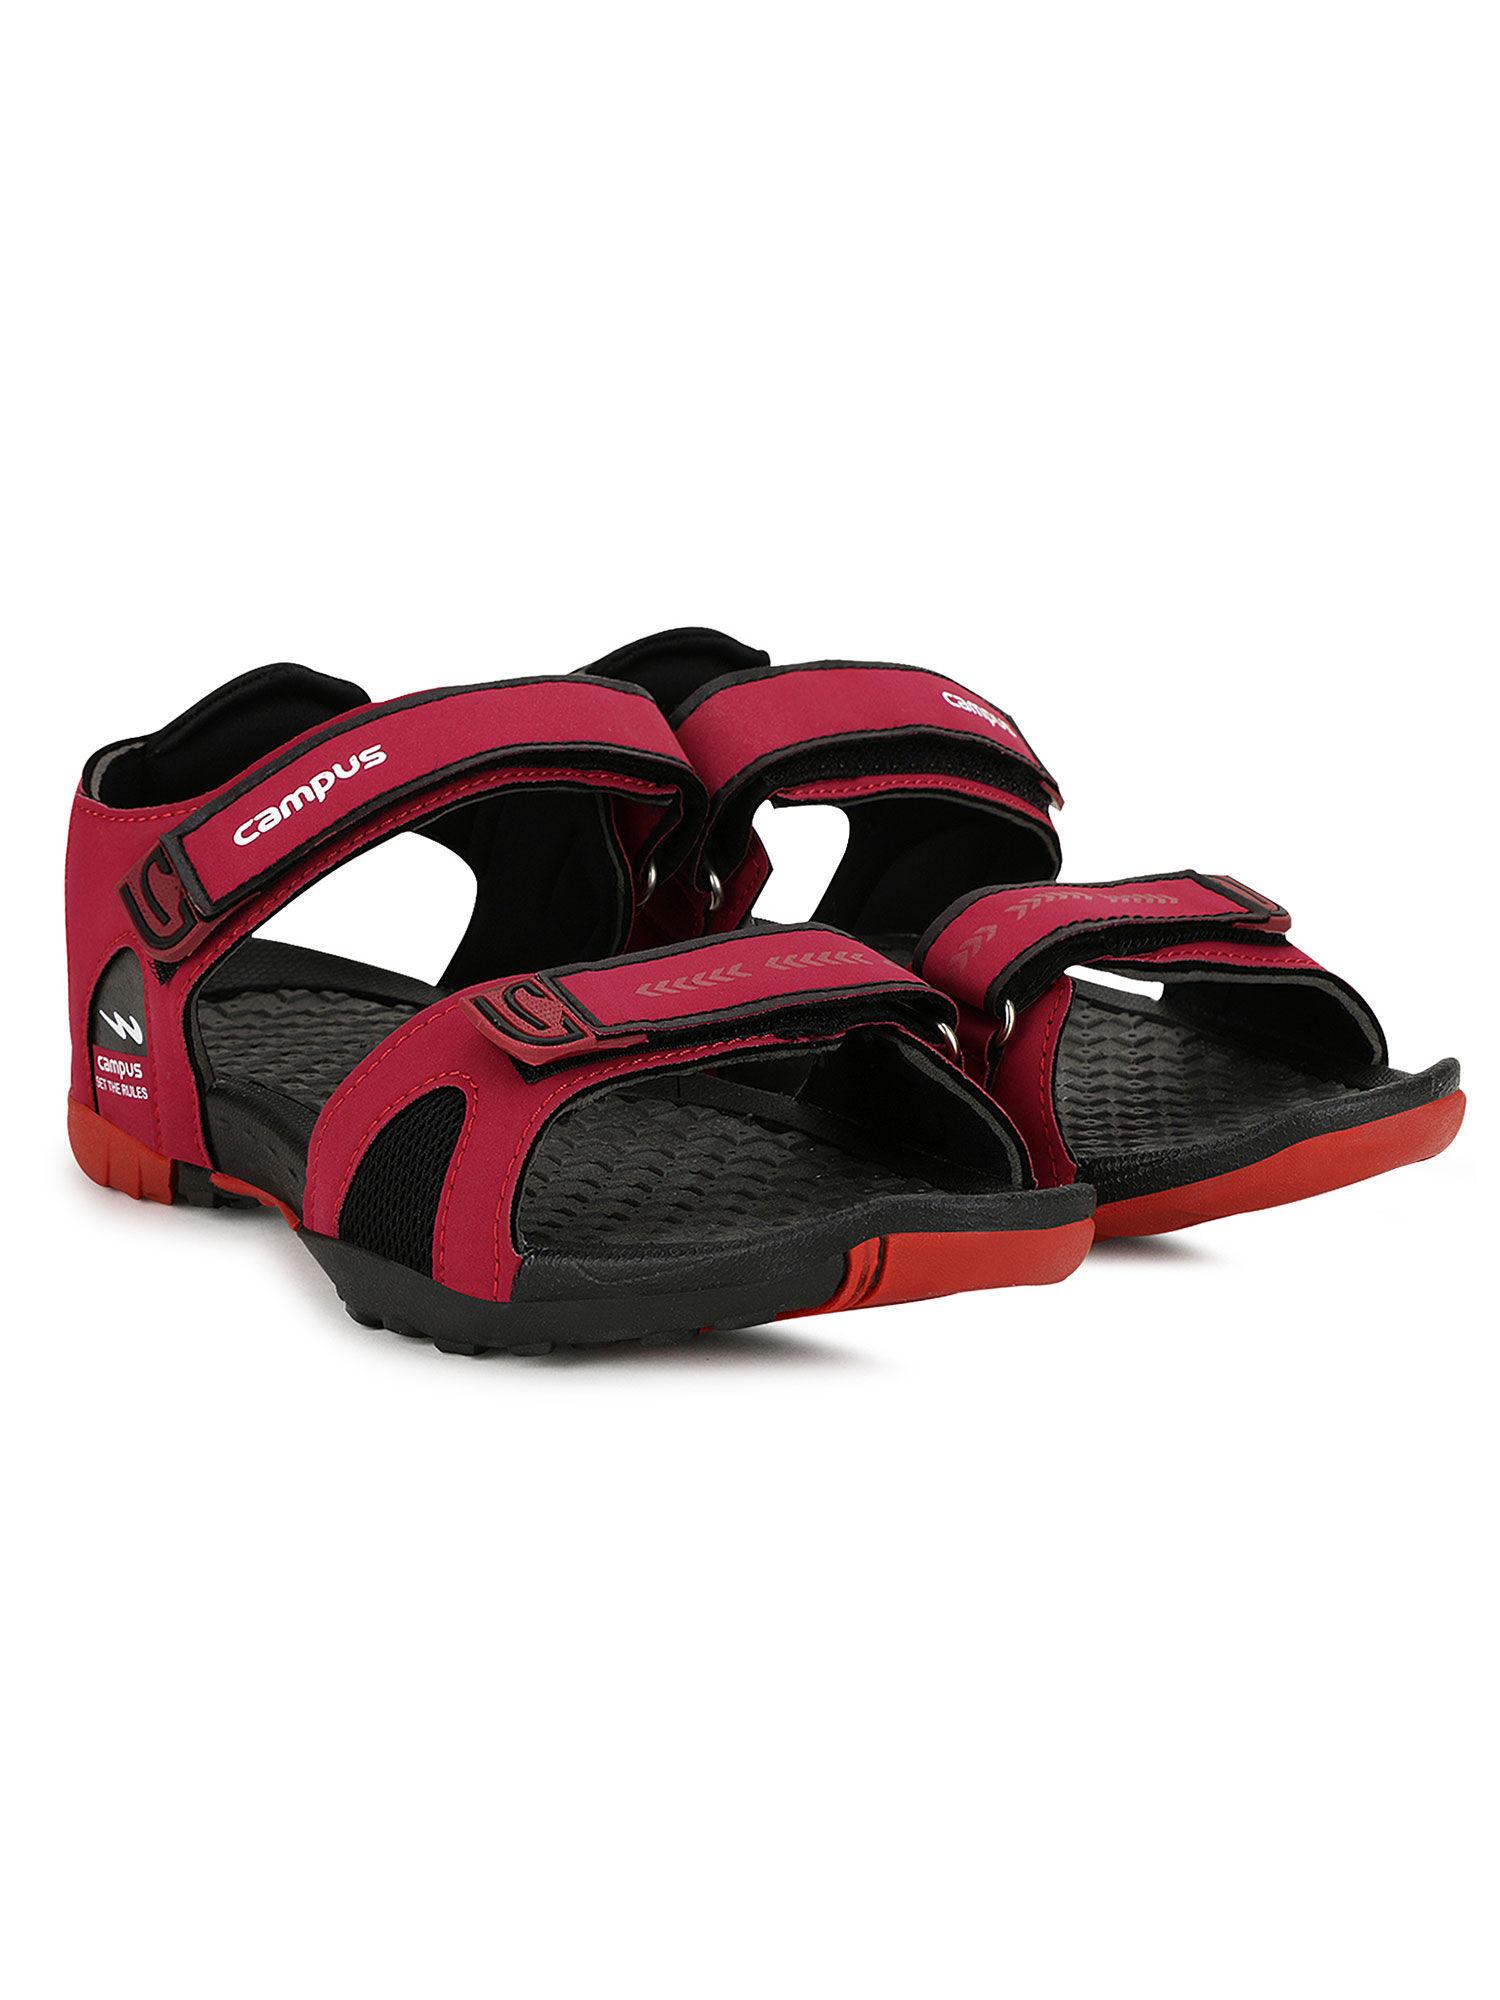 2gc-18 black sandals for men